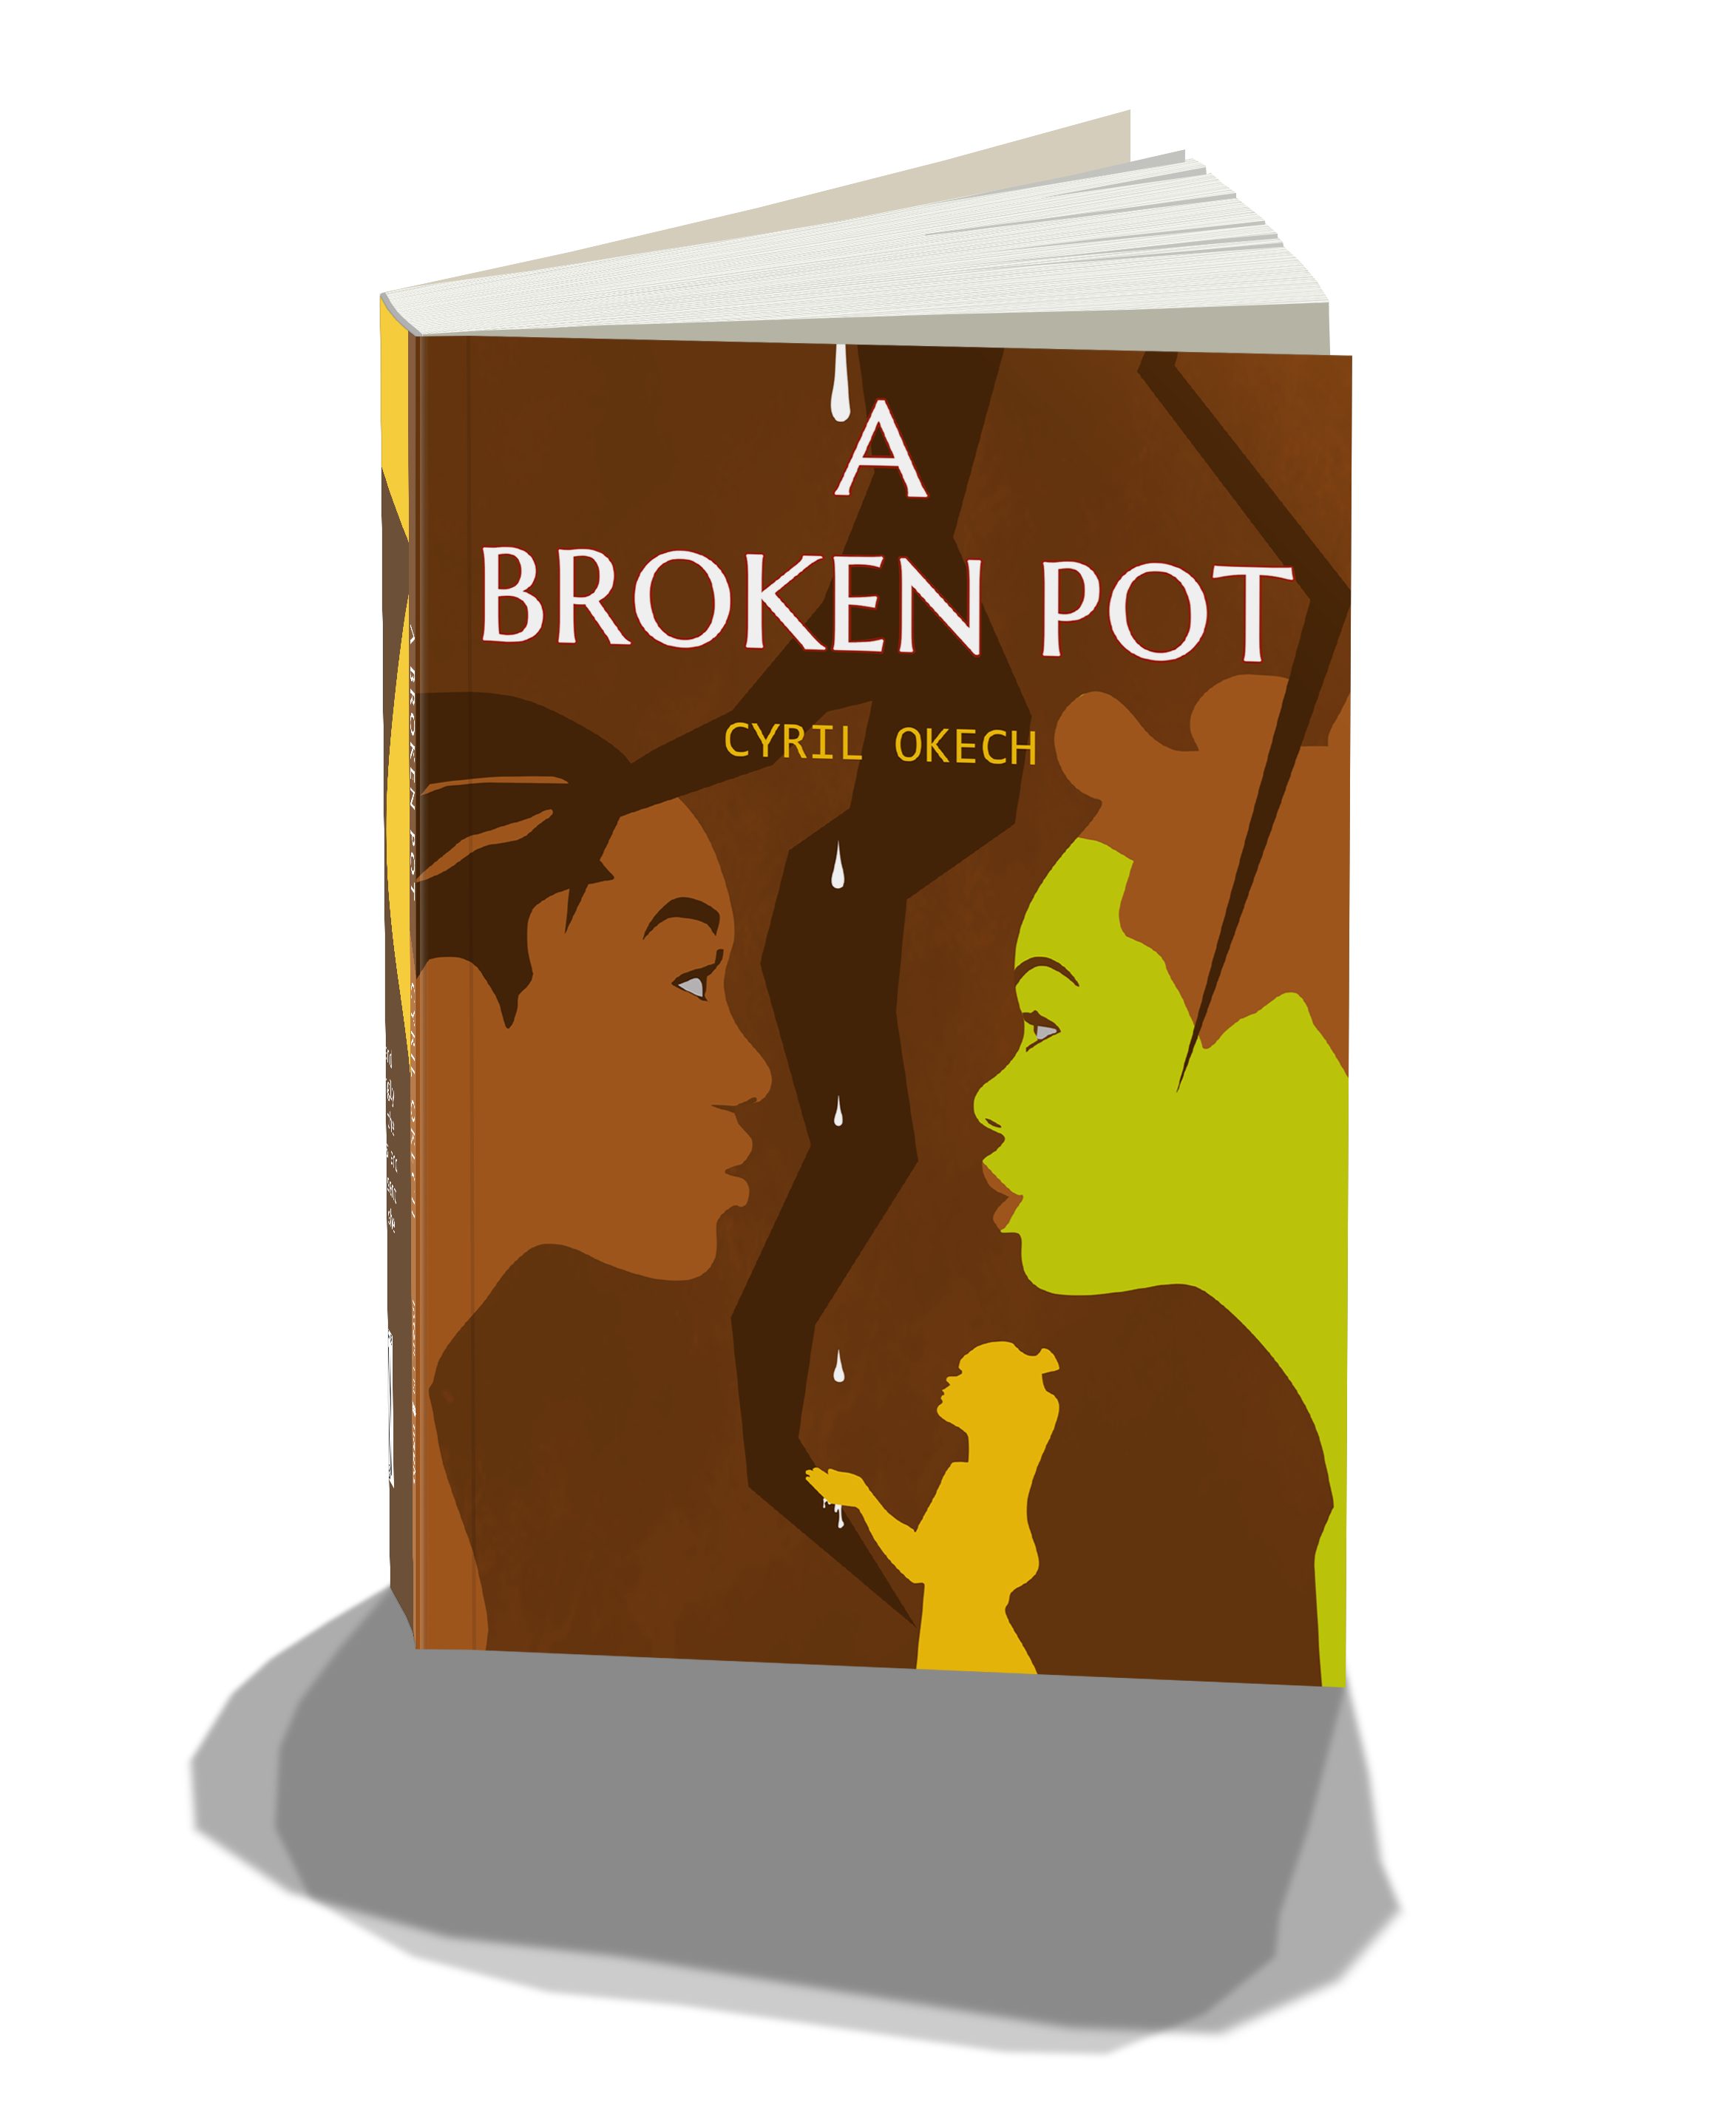 Broken Pot